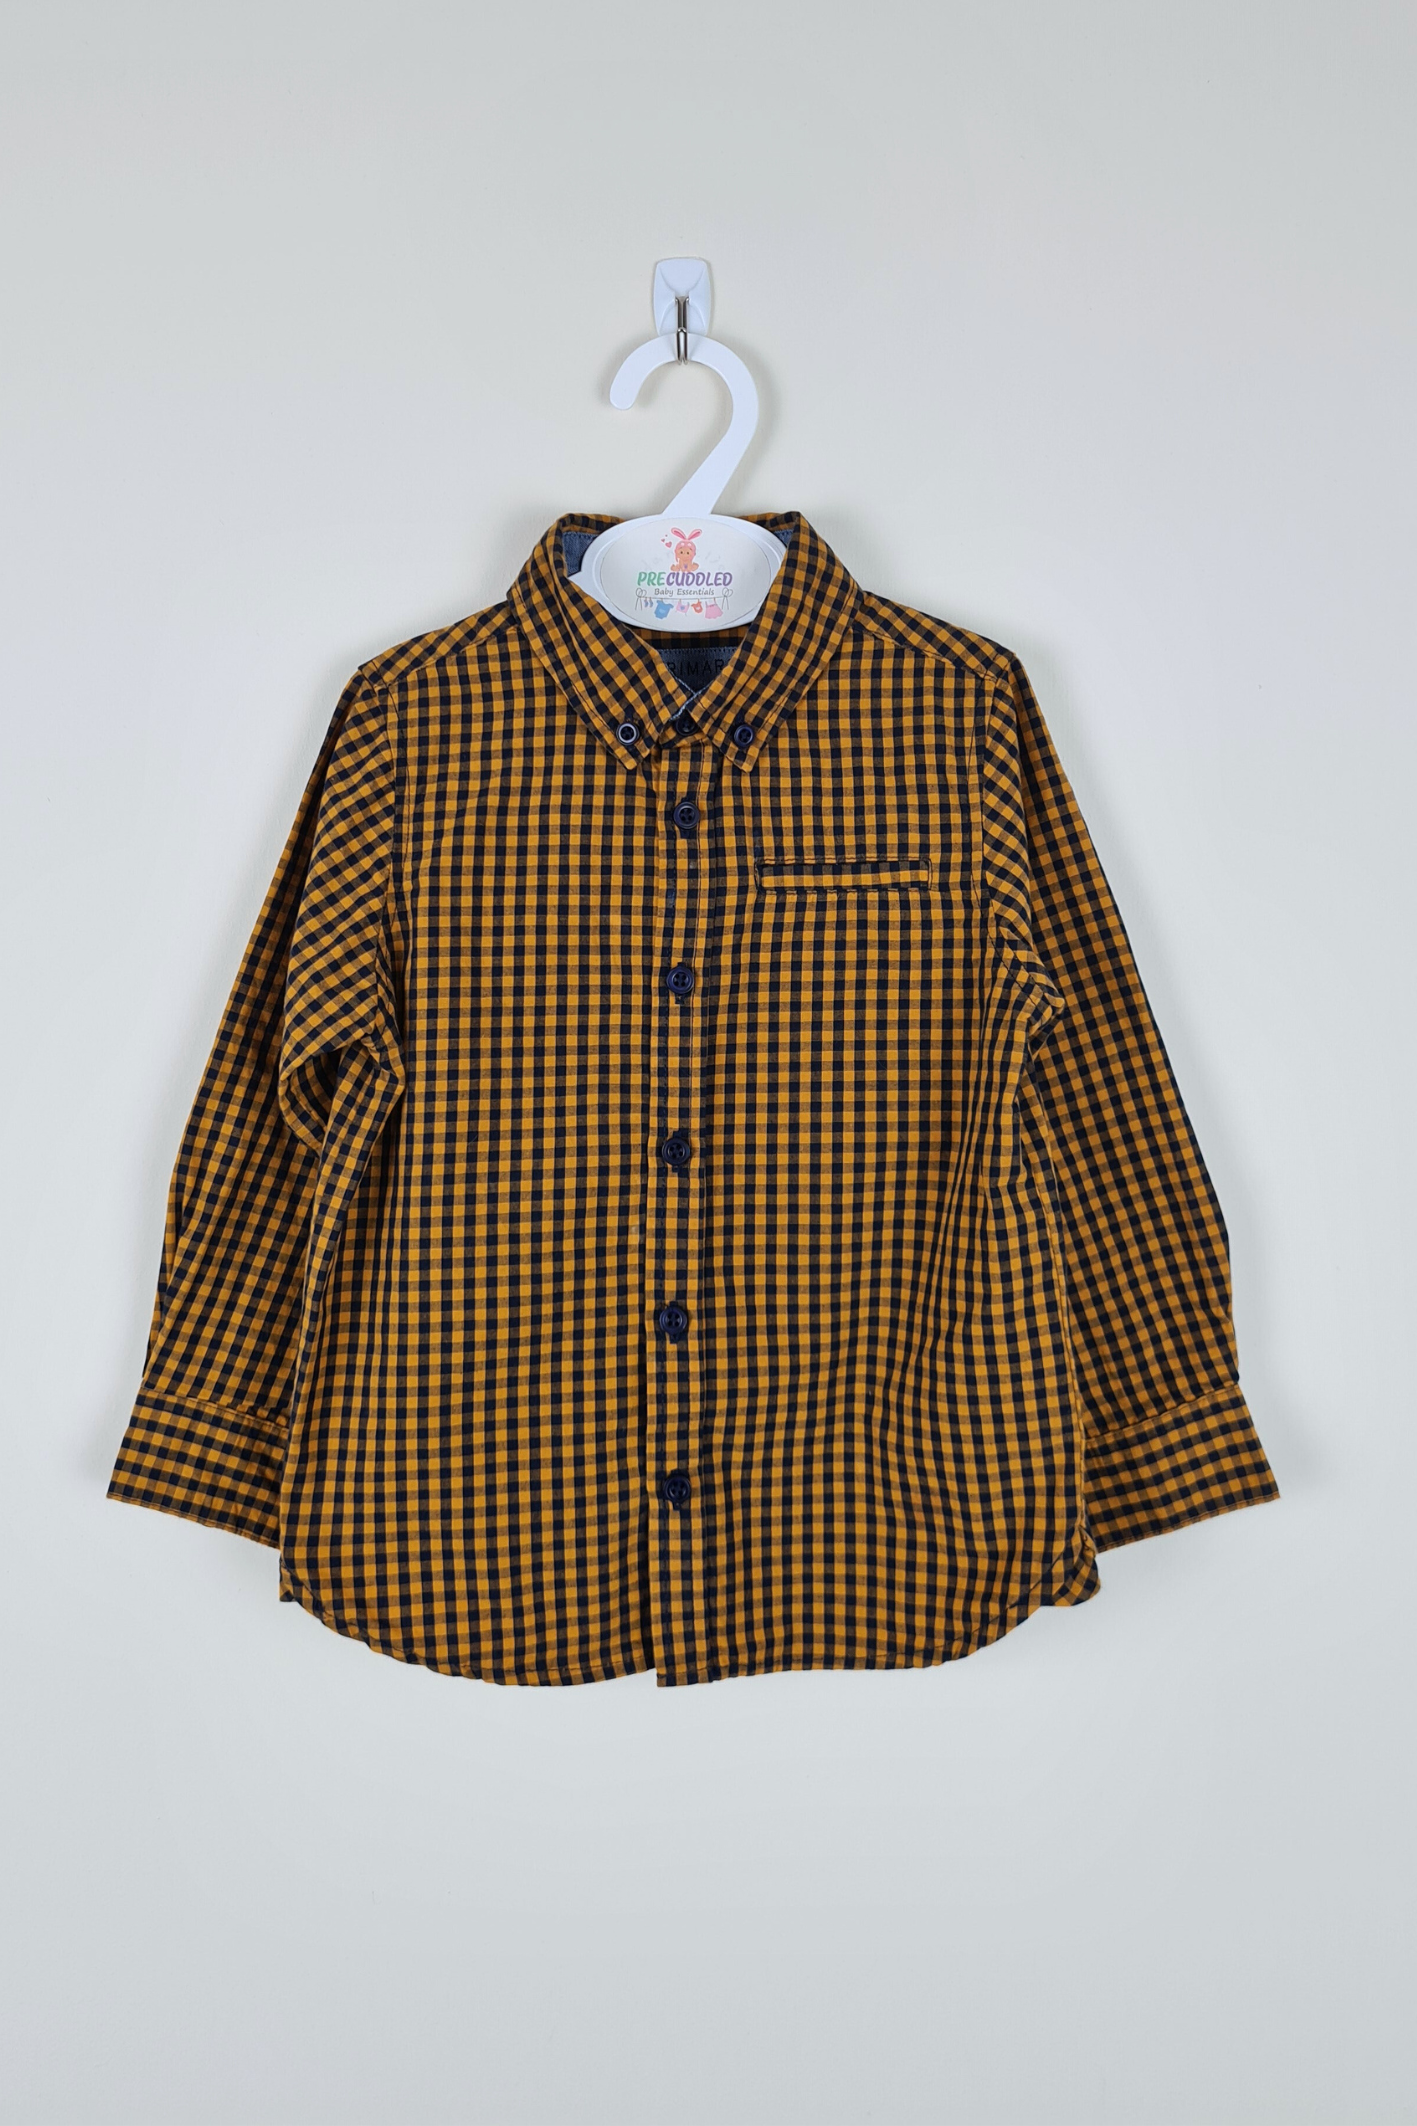 18-24m - 100% Cotton Yellow Check Button-Up Shirt (Primark)


